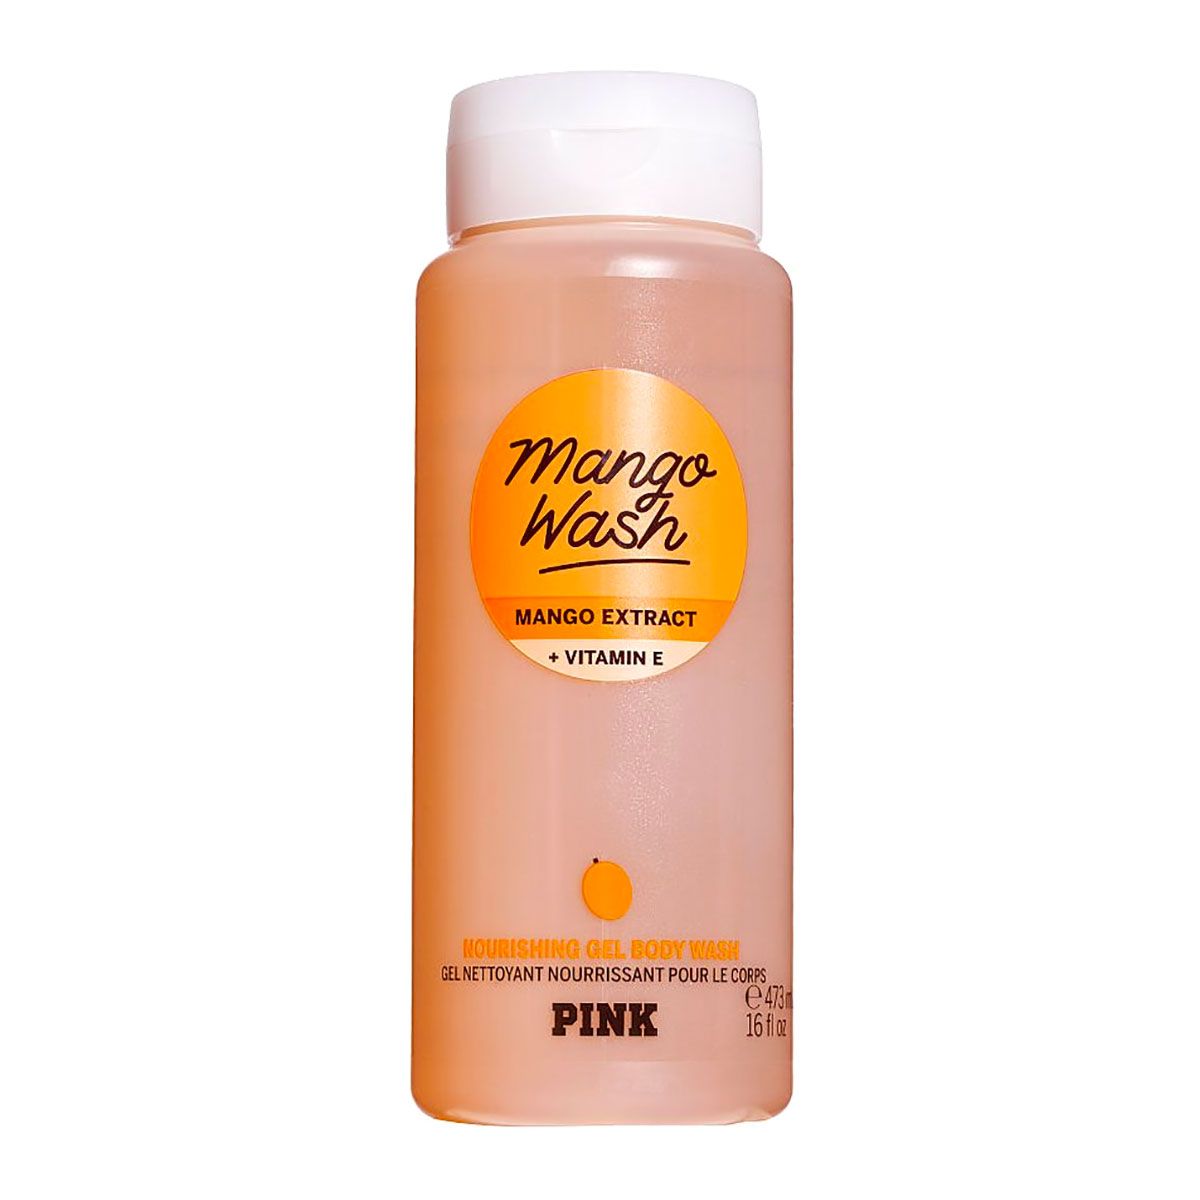 Victoria's Secret Pink Mango Wash Nourishing Gel Body Wash with Mango Extract